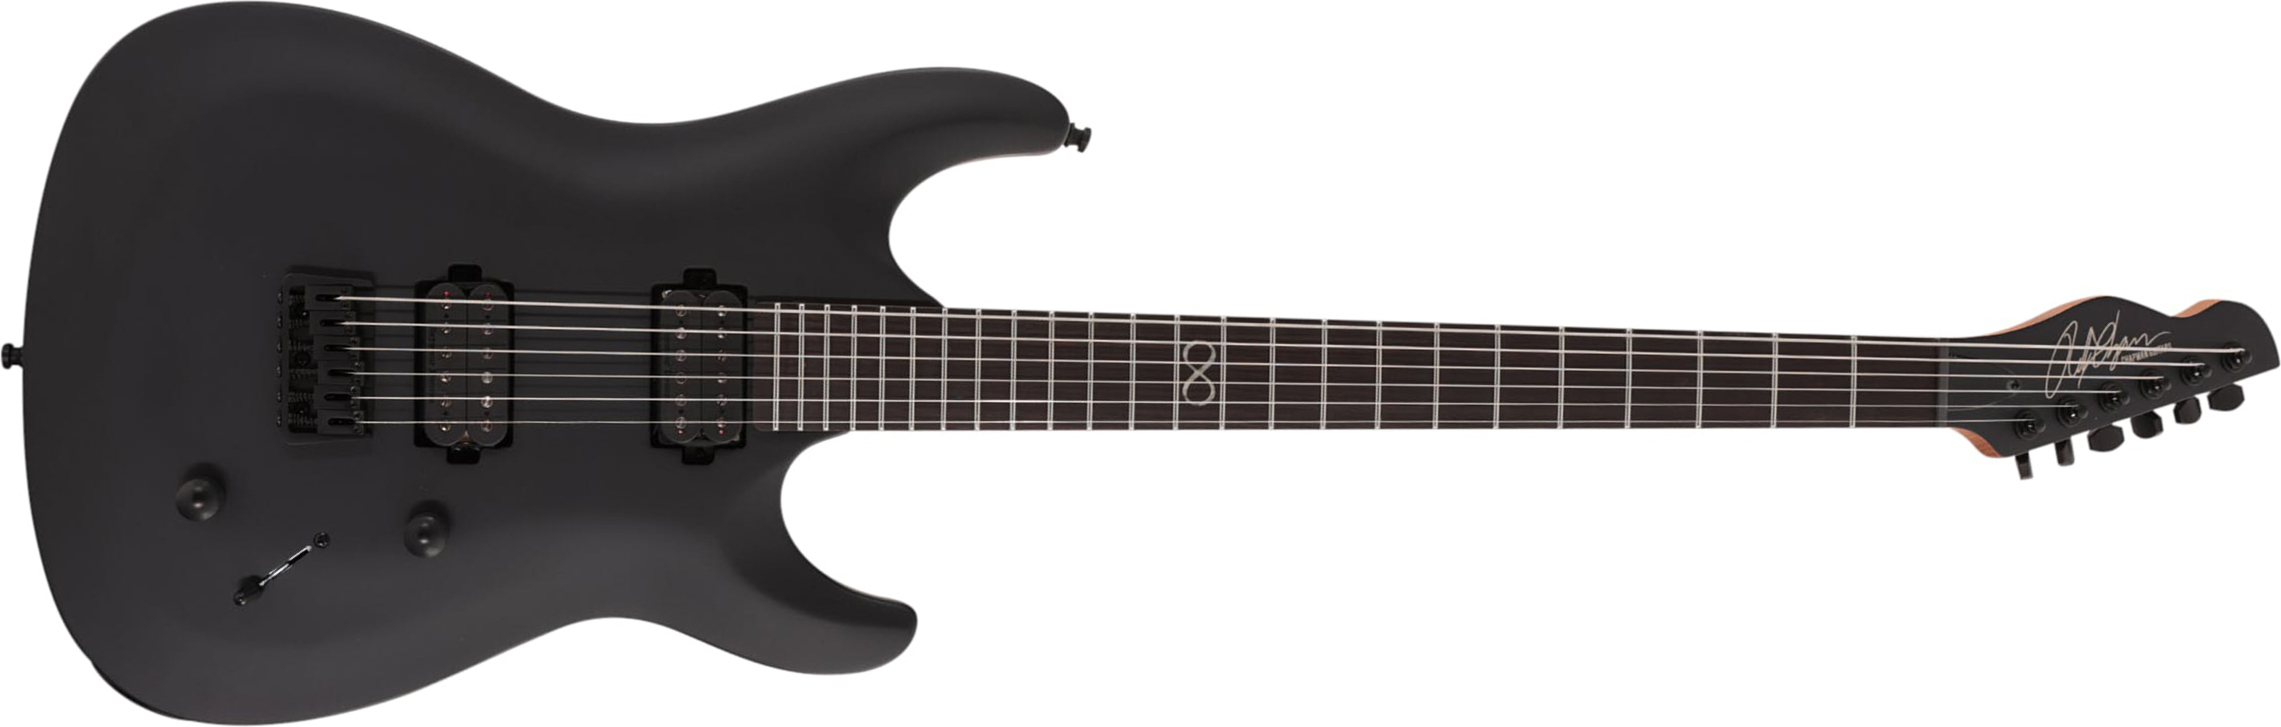 Chapman Guitars Ml1 Modern Baritone Pro 2h Seymour Duncan  Ht Eb - Cyber Black - Bariton elektrische gitaar - Main picture